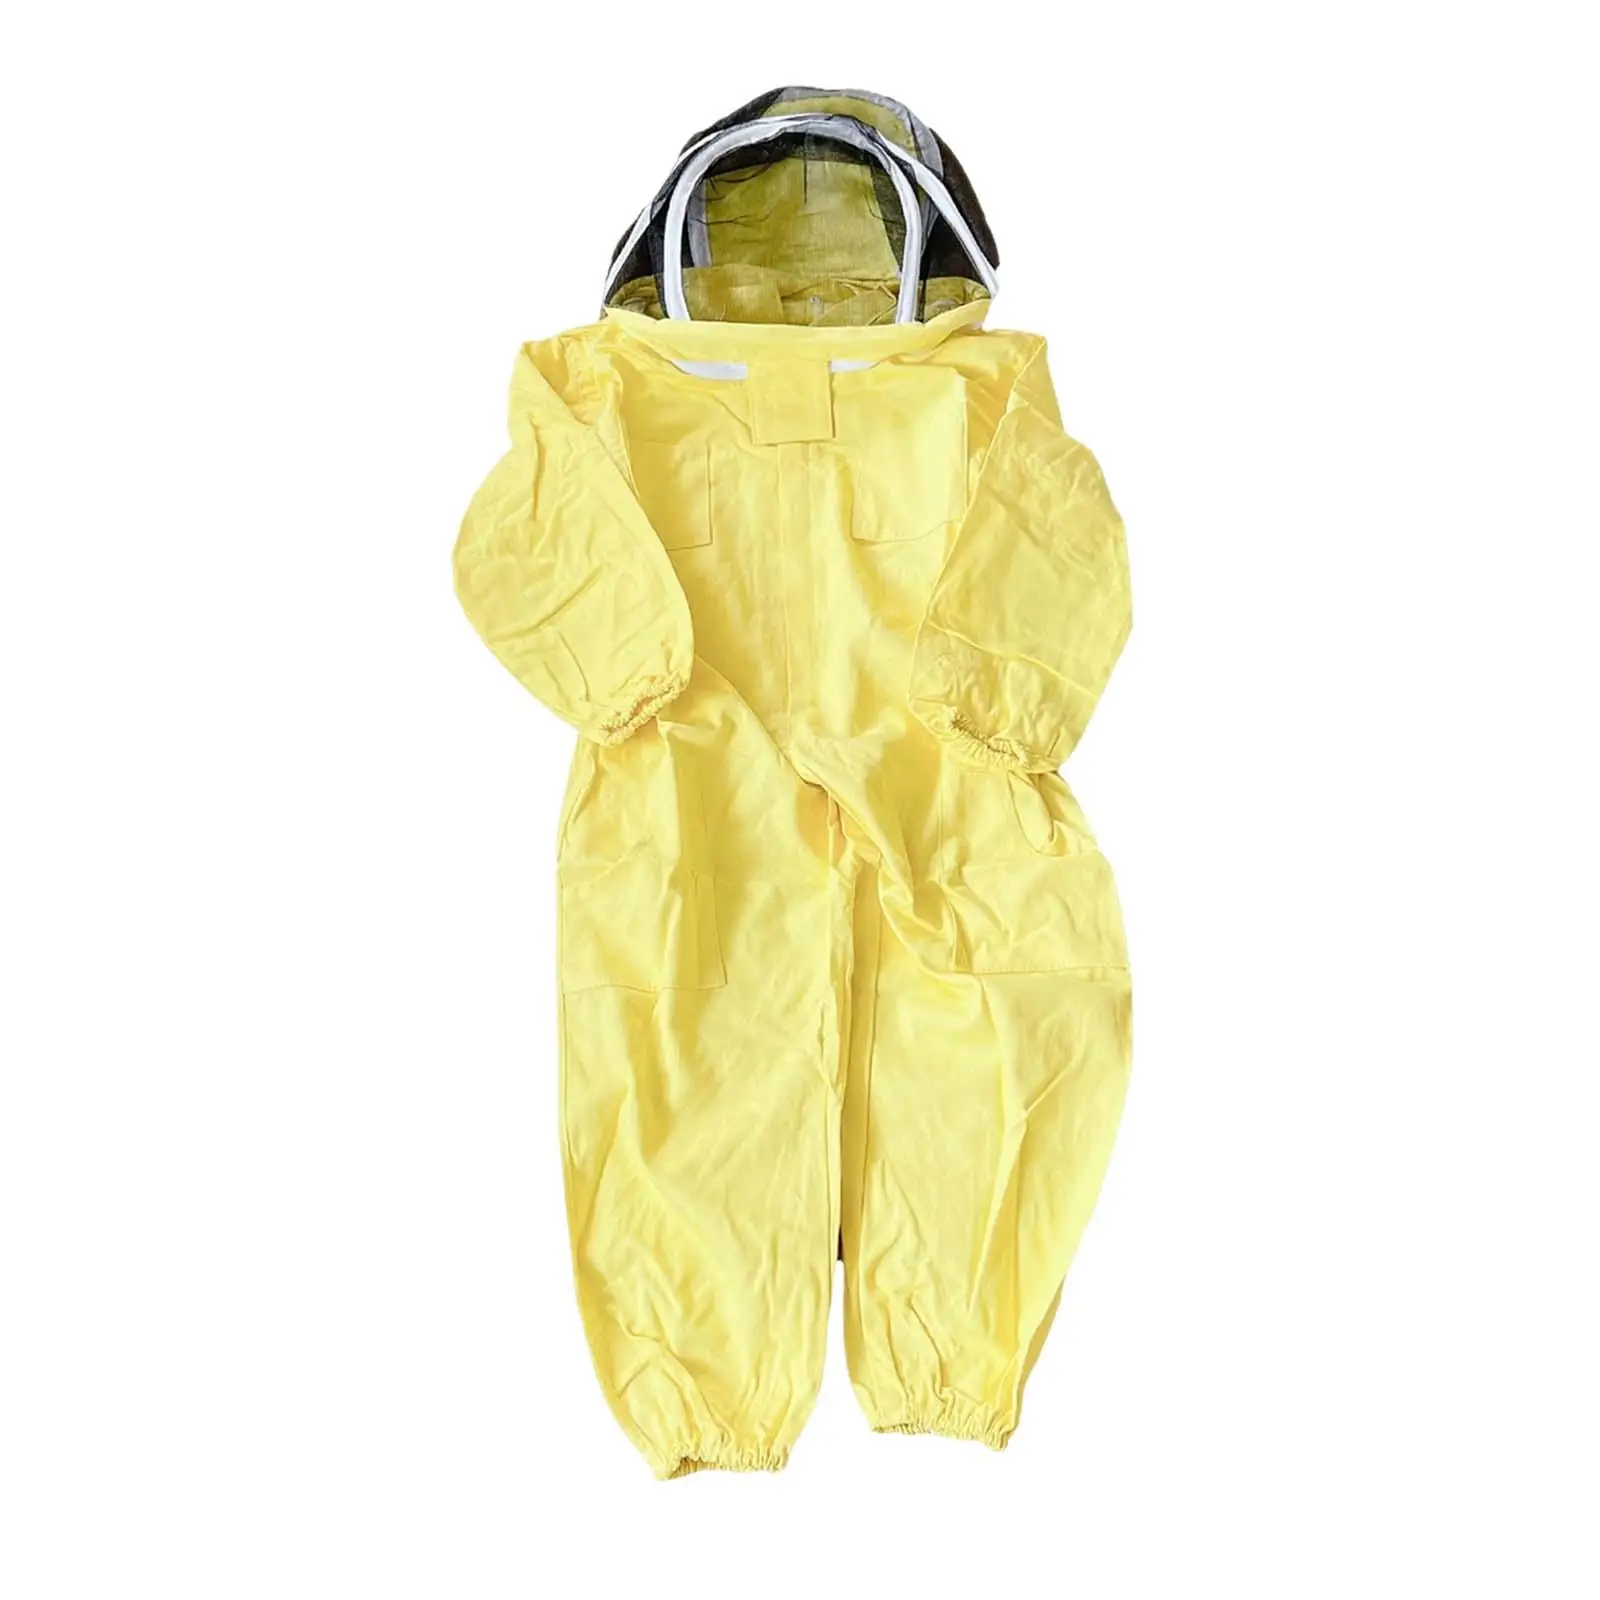 Kids Beekeeper Suit Full Body Beekeeping Protective Suit Anti Bee Protective Equipment Comfortable for Boys Children